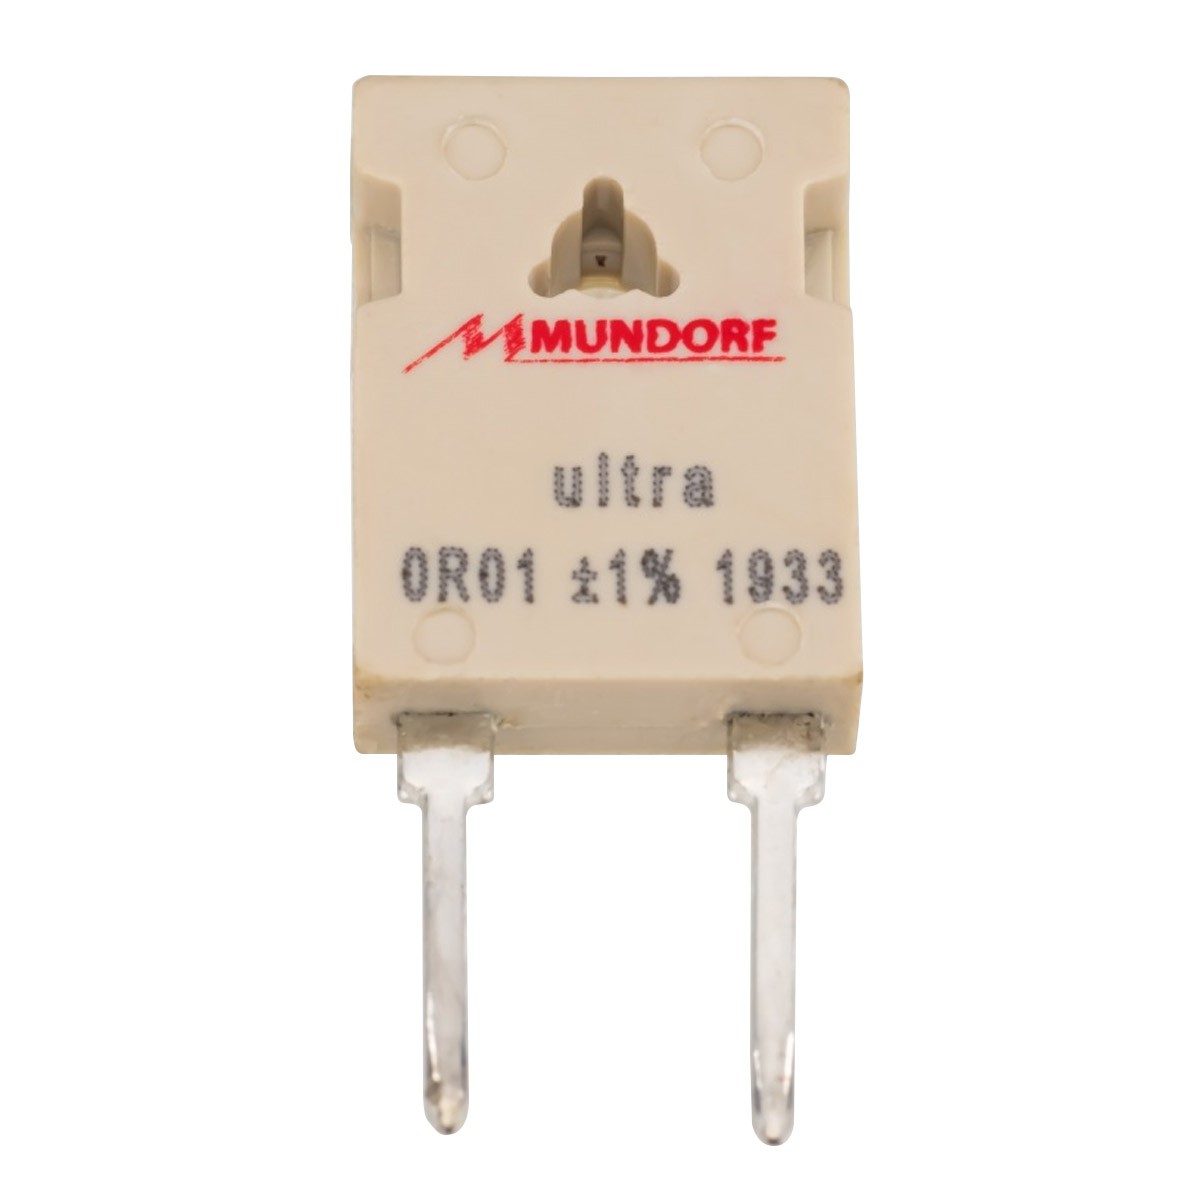 MUNDORF MRESIST ULTRA Resistor 30W 1.2 Ohm